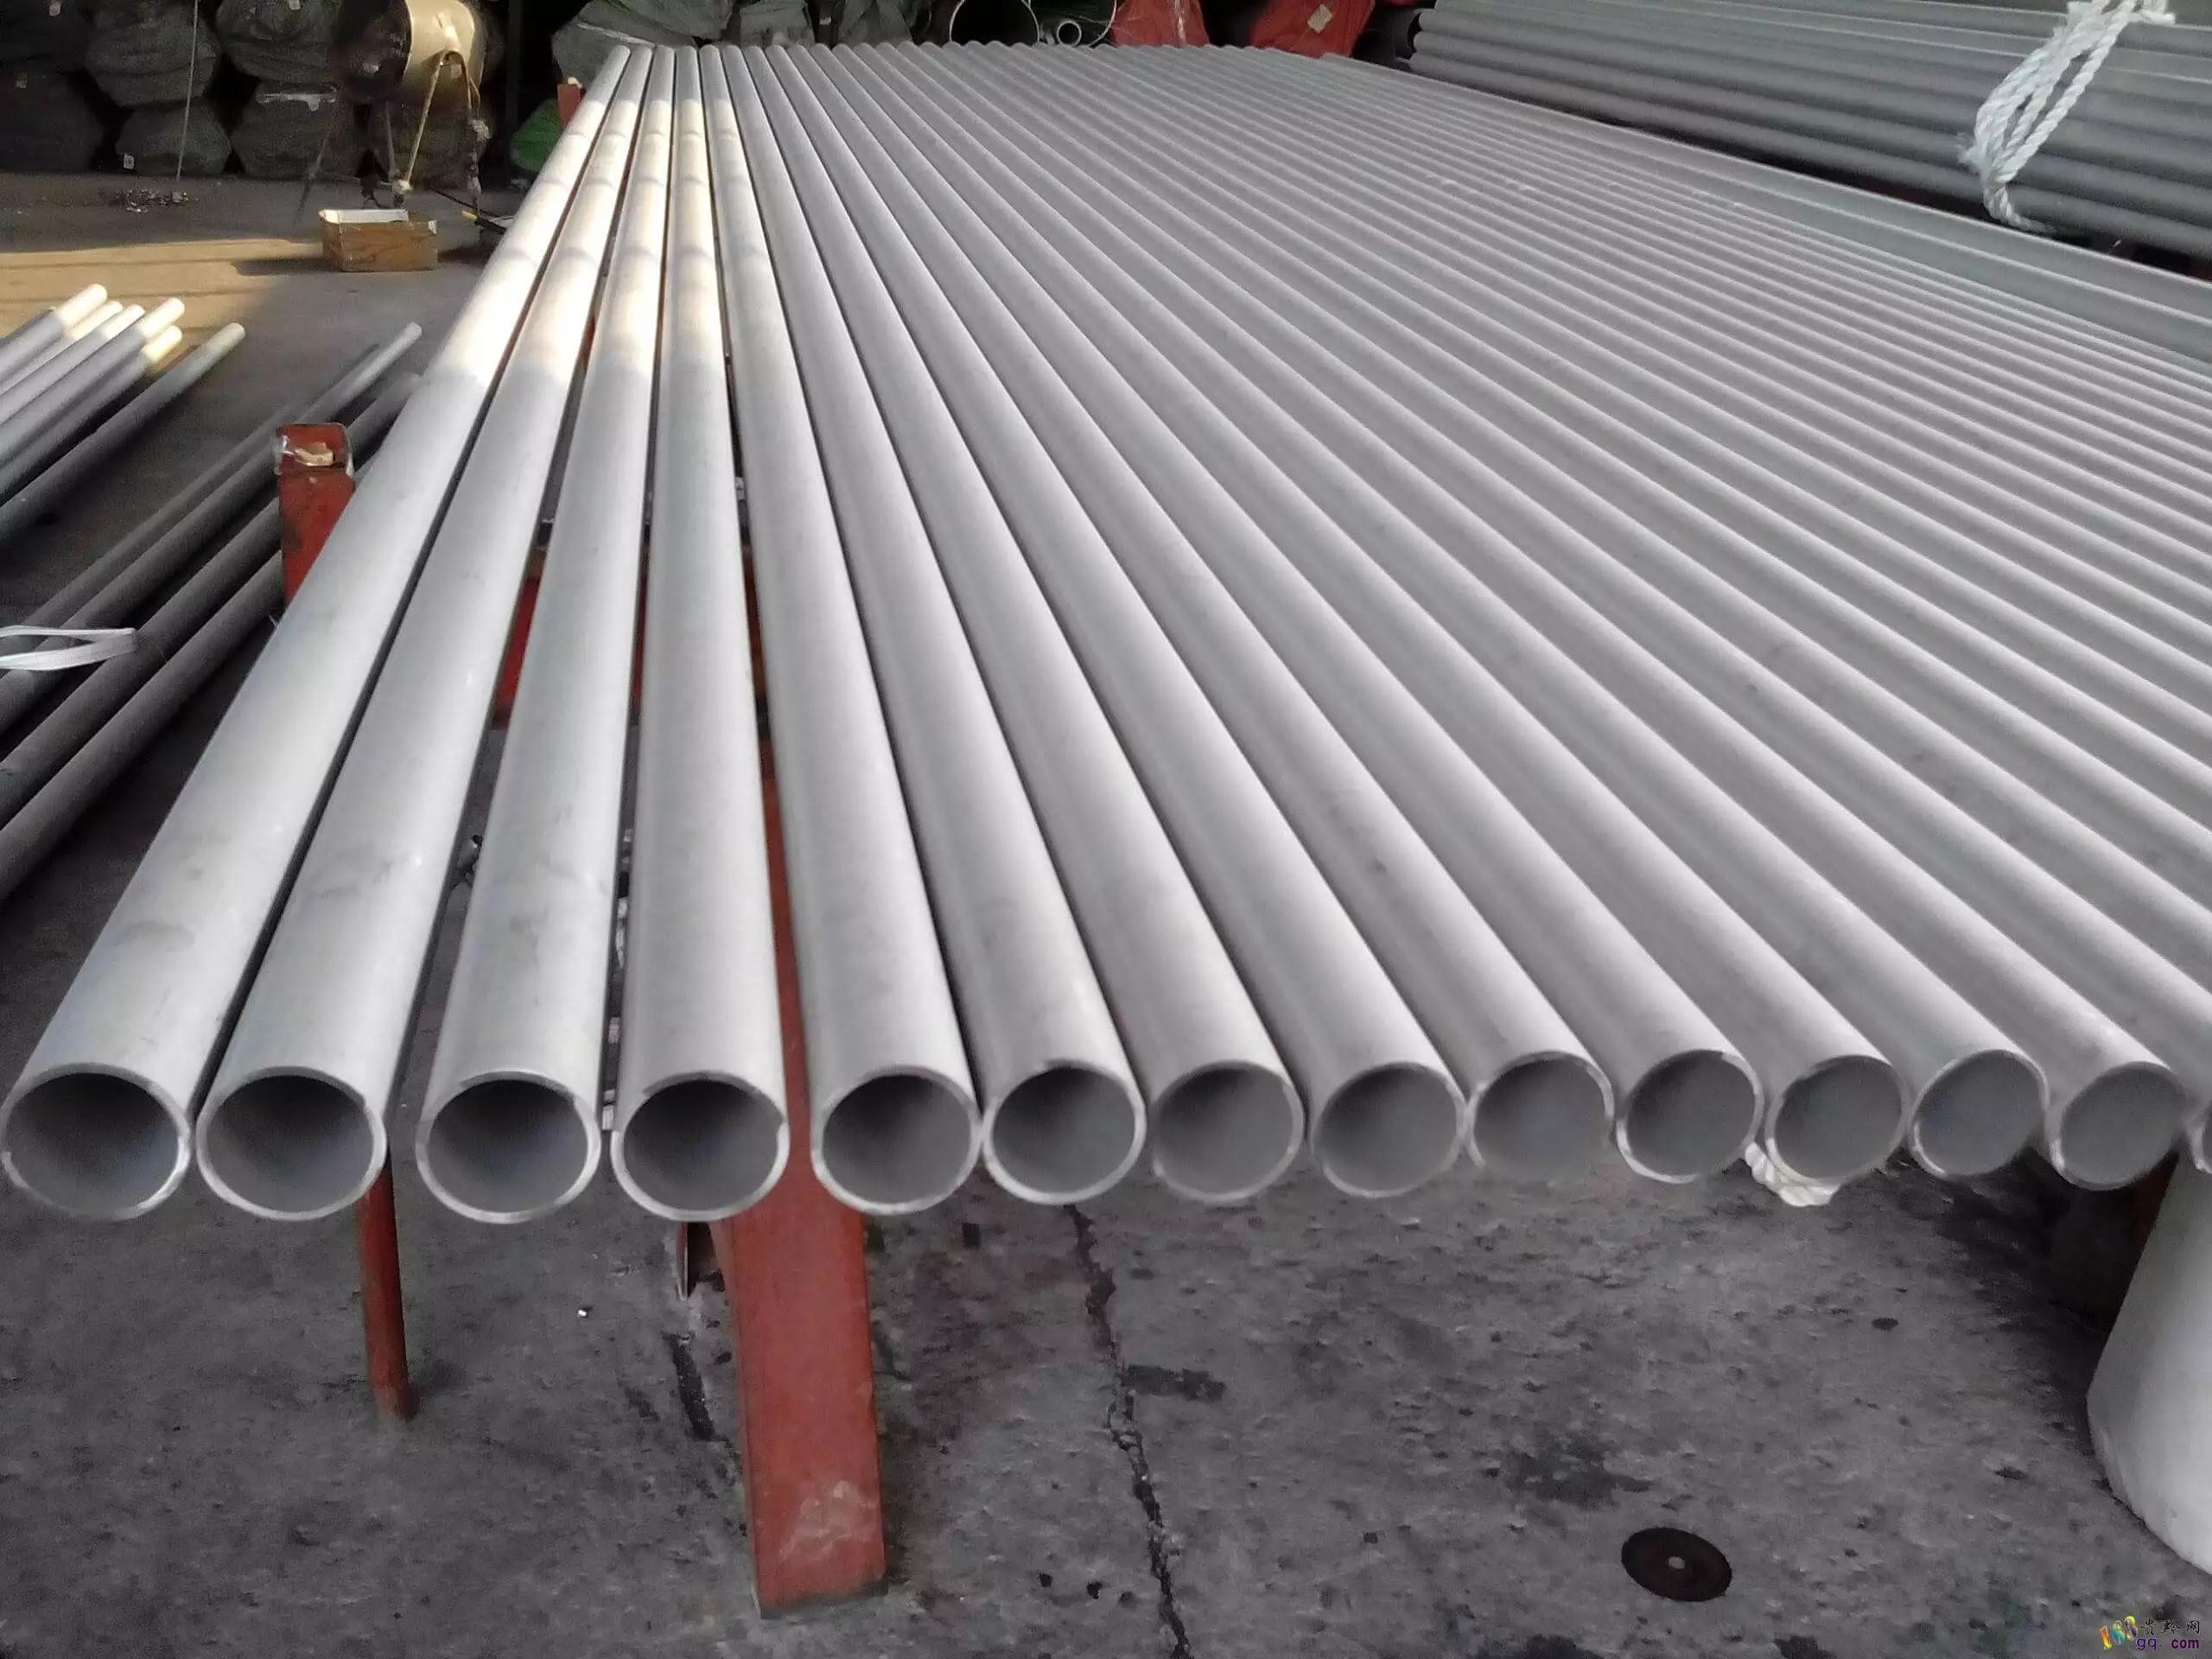 439 Stainless Steel Welded Pipe Tube (heat exchange use)